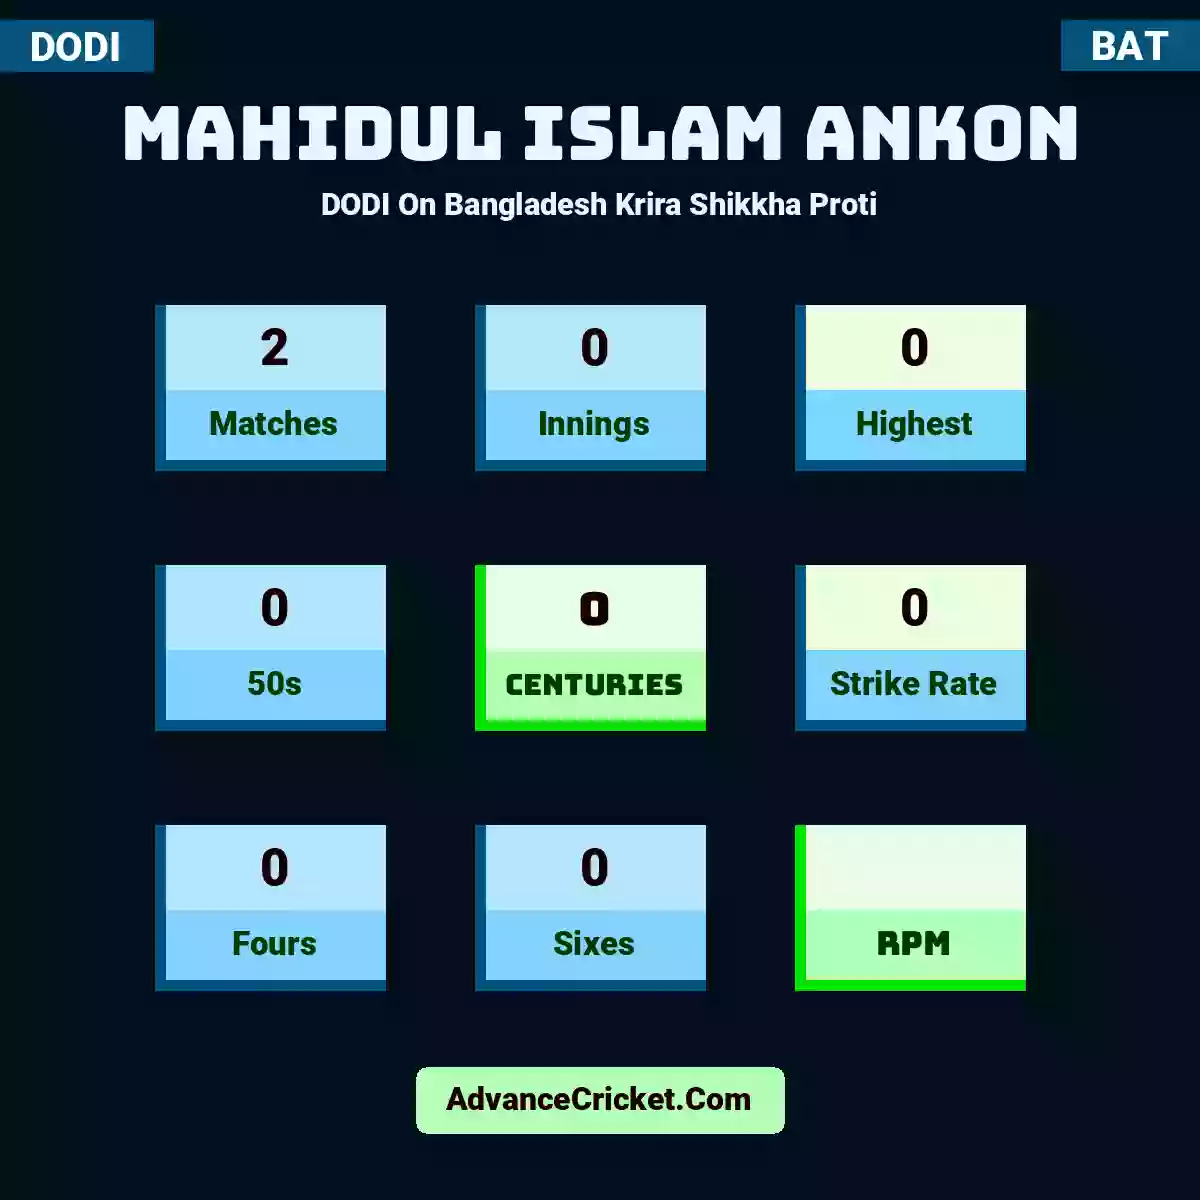 Mahidul Islam Ankon DODI  On Bangladesh Krira Shikkha Proti, Mahidul Islam Ankon played 2 matches, scored 0 runs as highest, 0 half-centuries, and 0 centuries, with a strike rate of 0. M.Ankon hit 0 fours and 0 sixes.